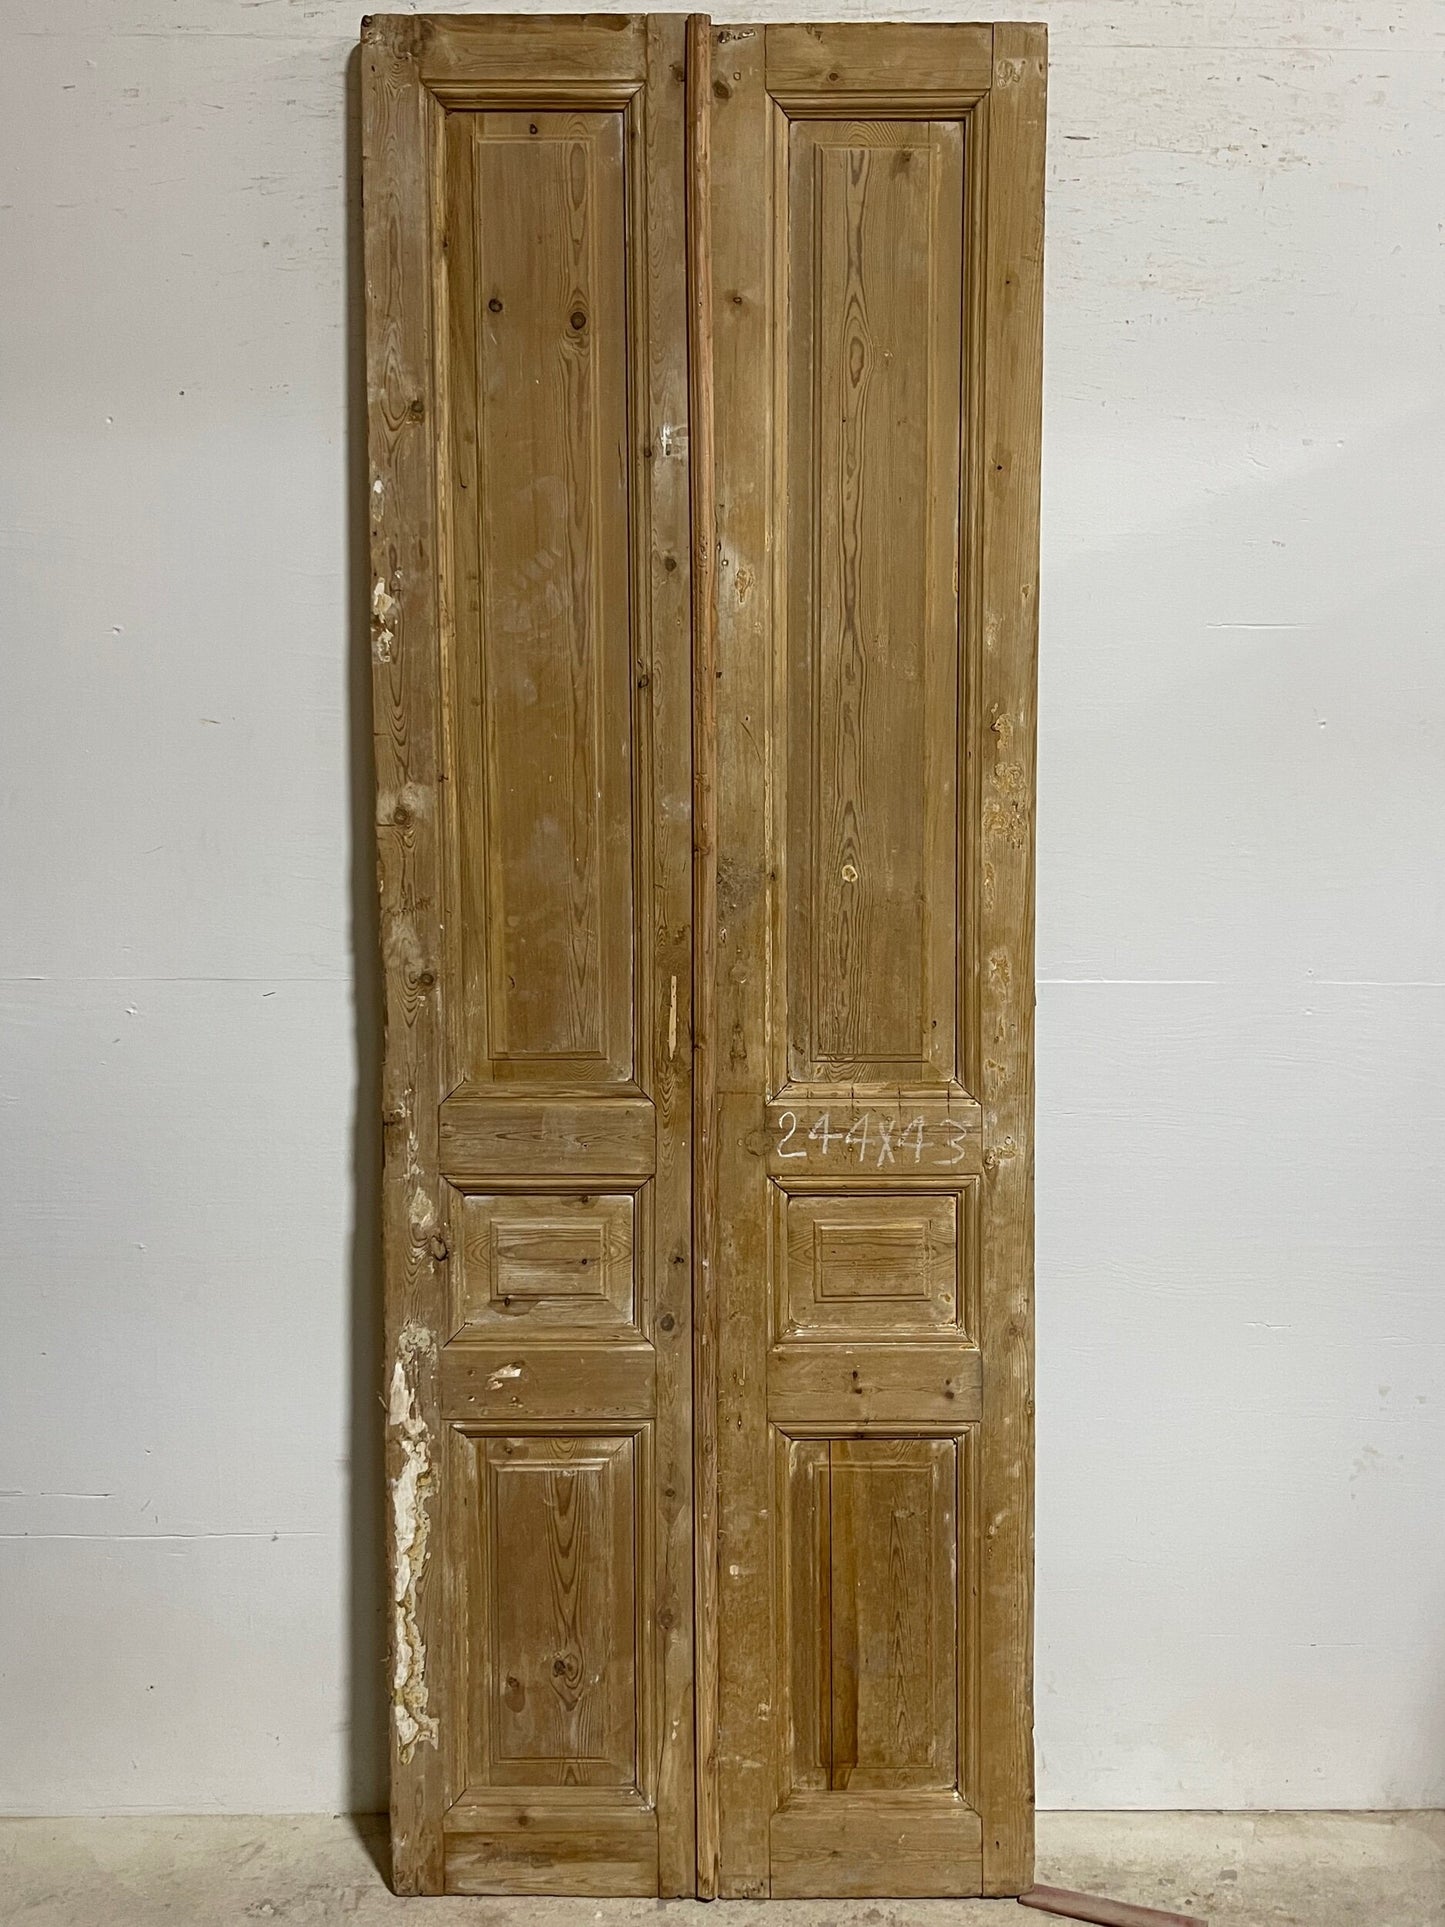 Antique French panel doors (96.5x34.25) I159